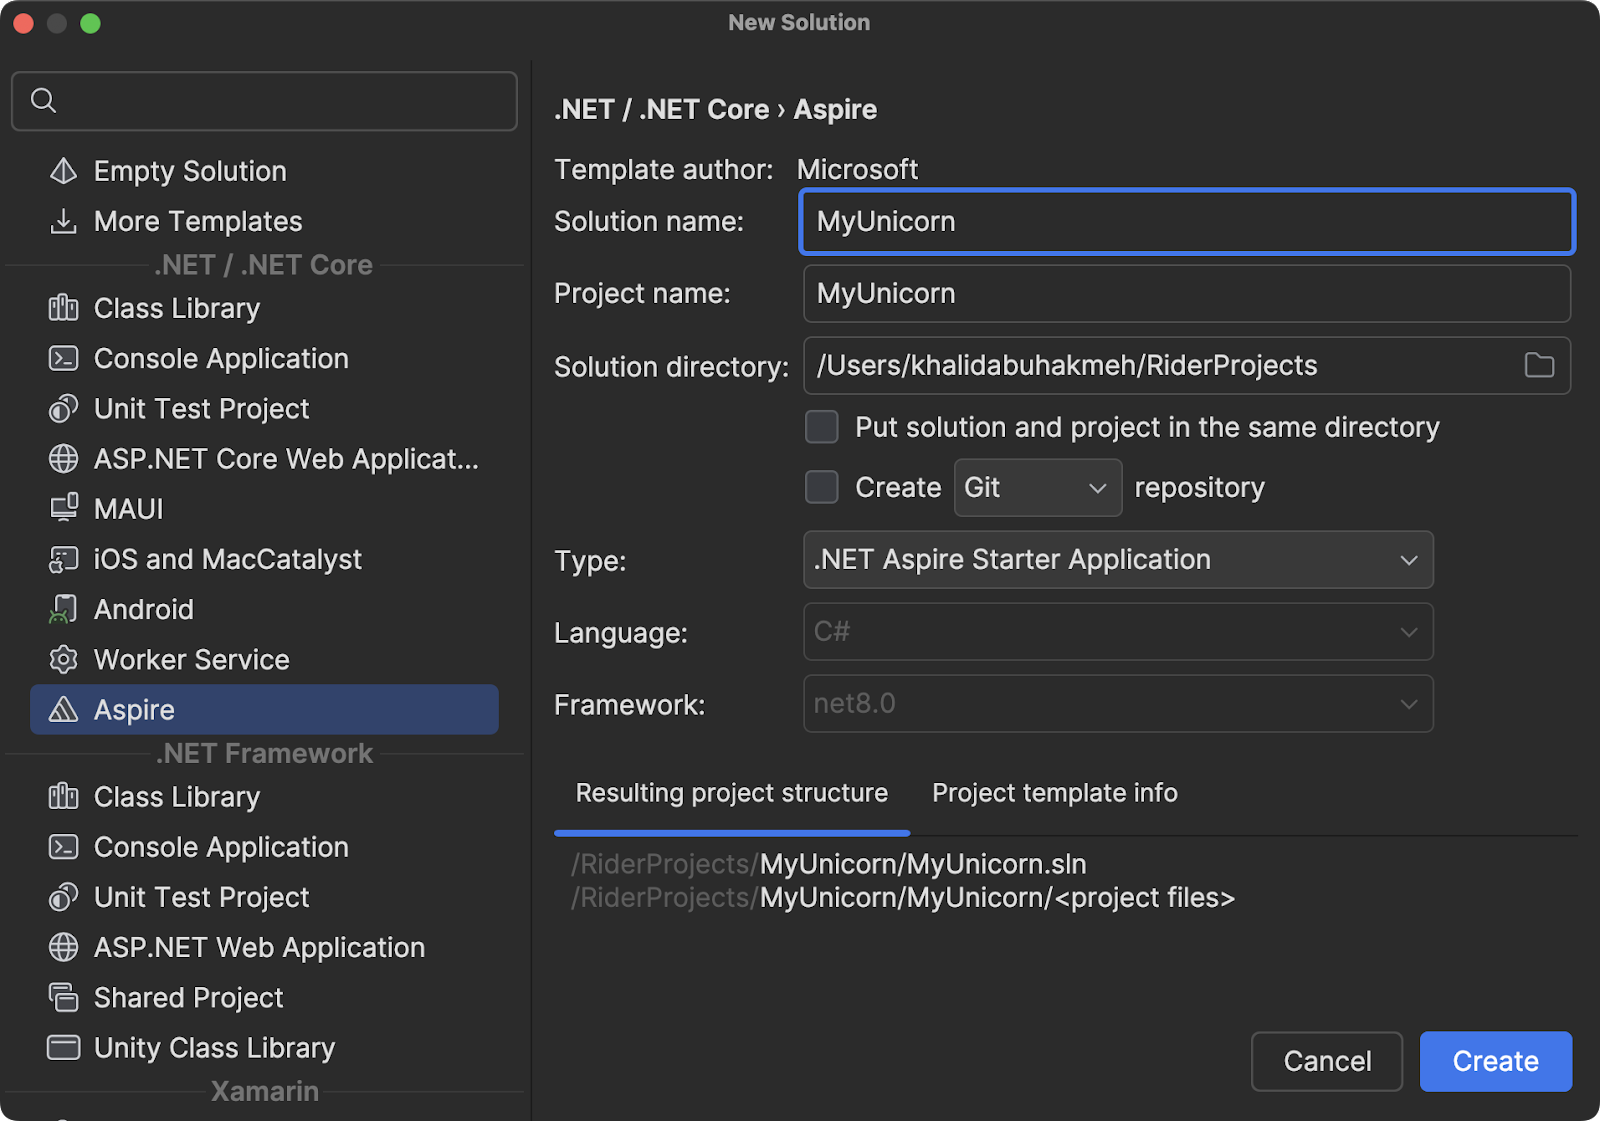 JetBrains Rider New Solution screen showing .NET Aspire workload